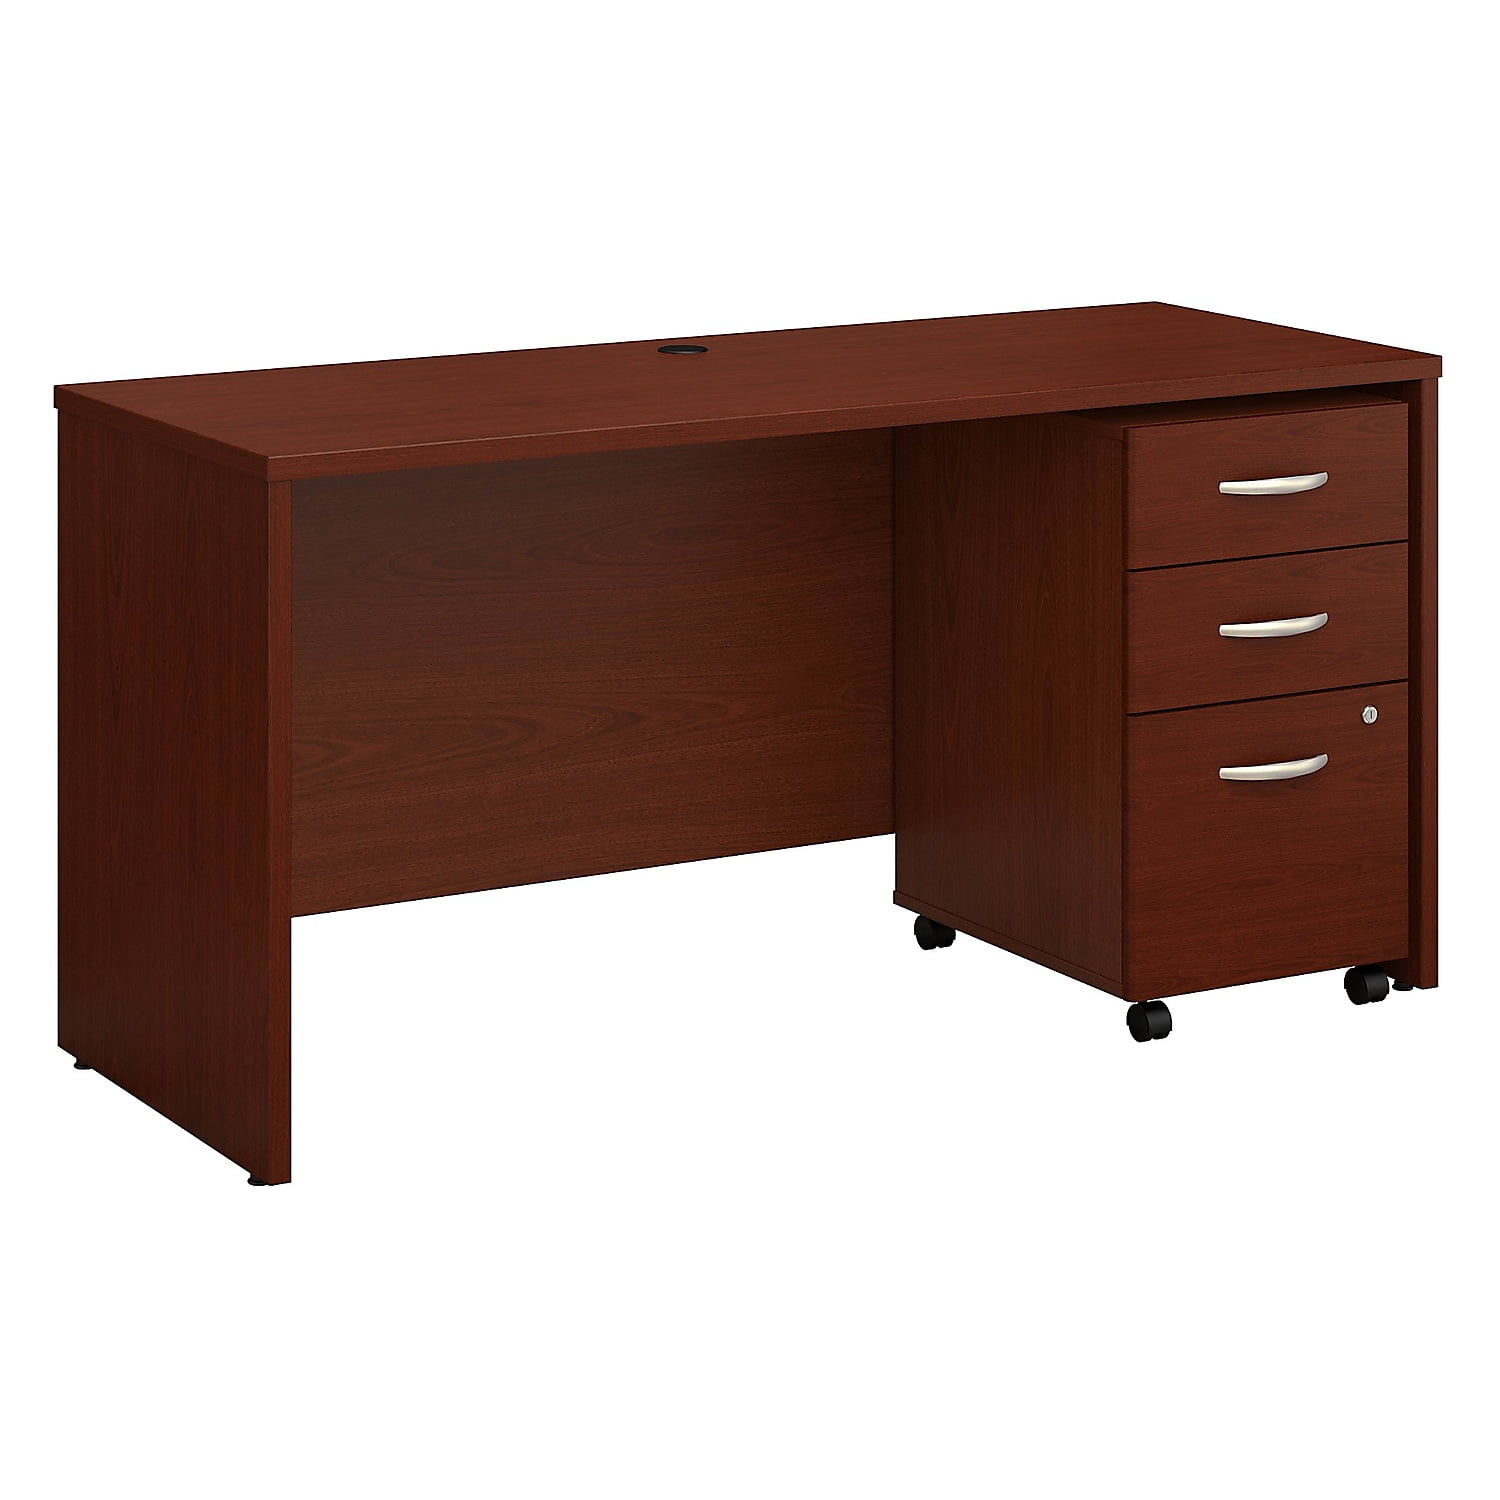 Picture of Bush Business Furniture SRC025MASU 60 x 24 in. Series C Office Desk with Mobile File Cabinet - Mahogany